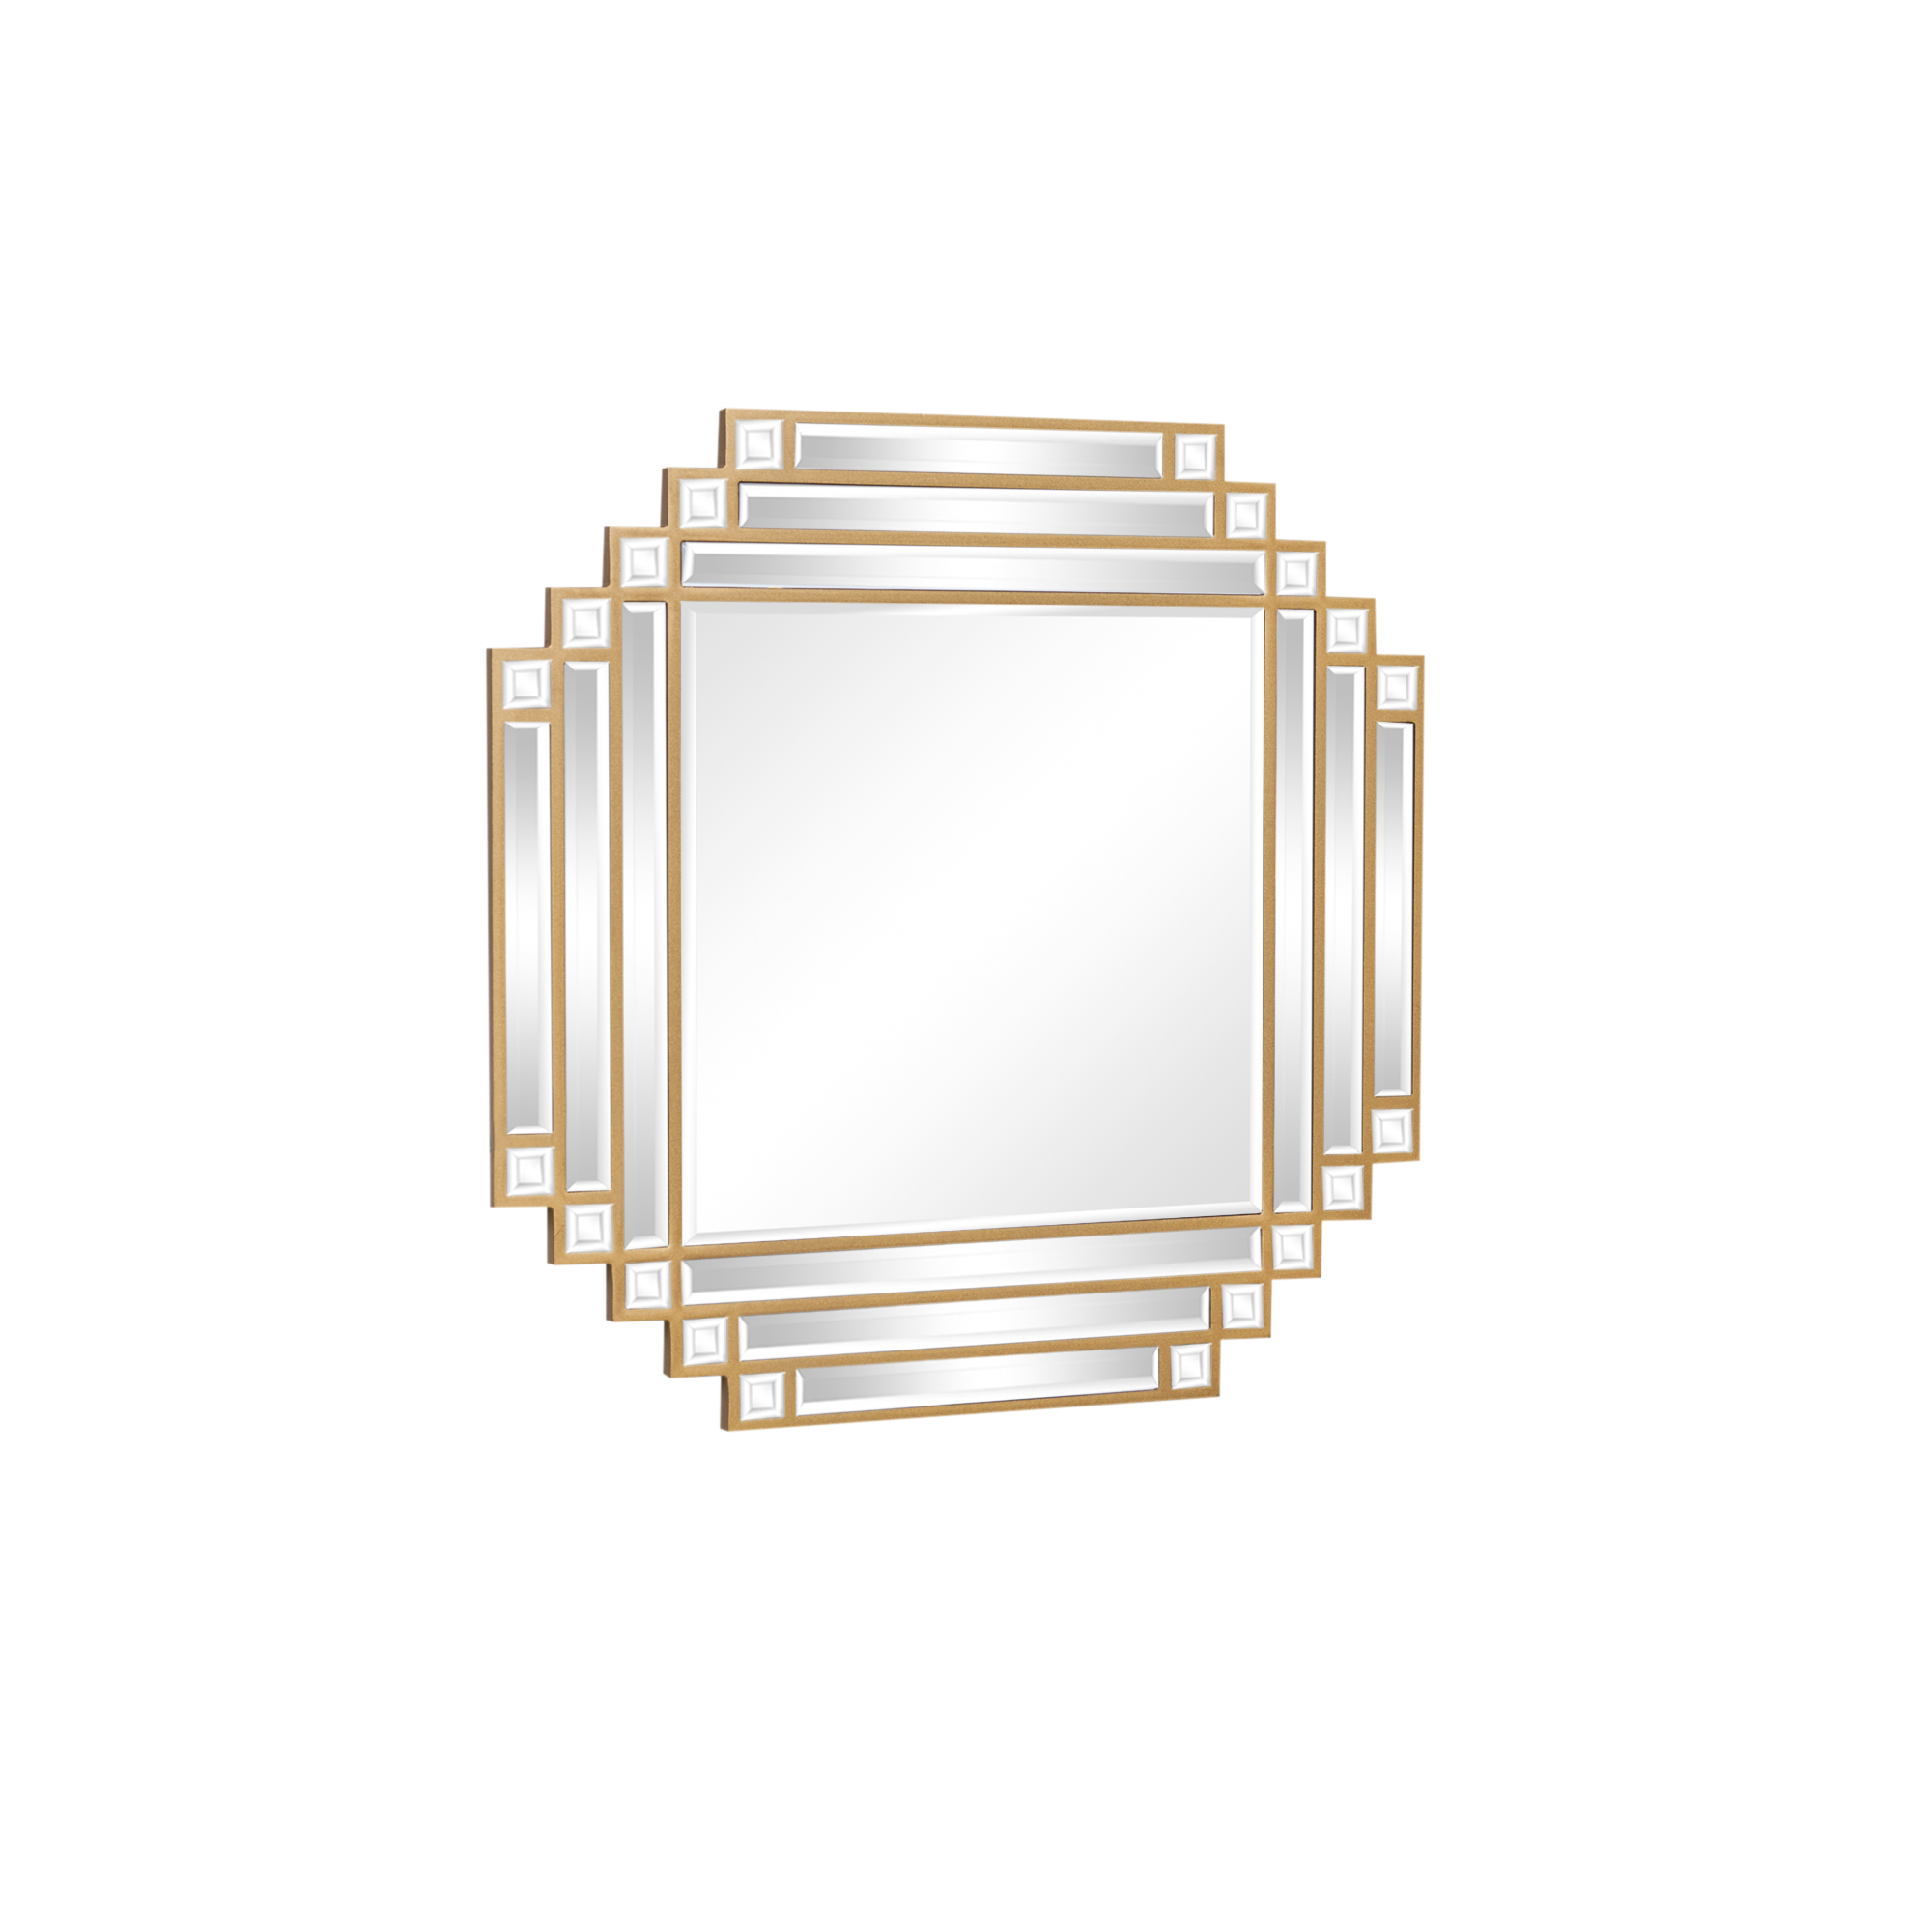 Square Gold Art Deco Fan Wall Mirror 55cm x 55cm